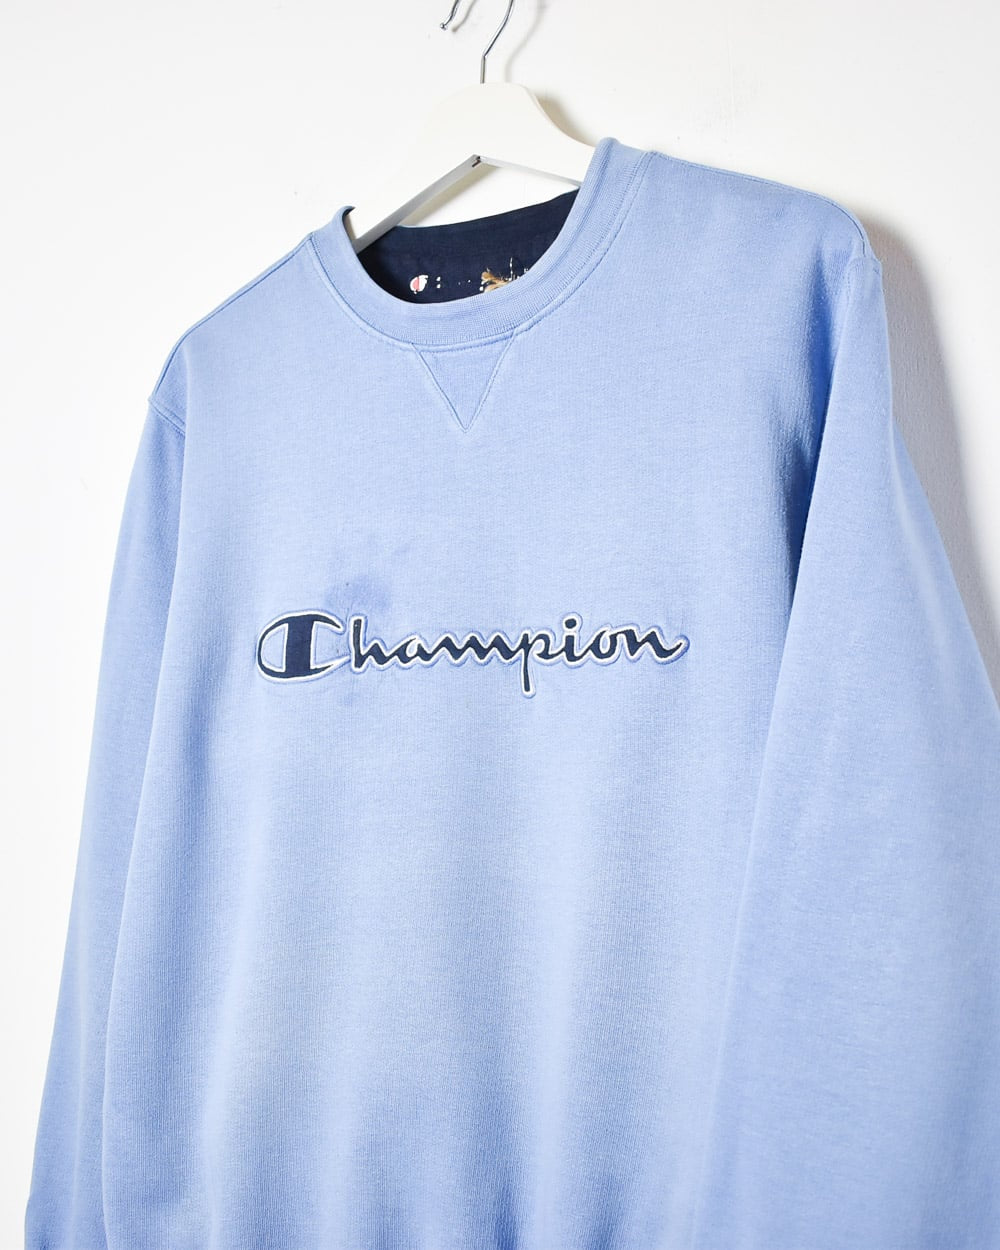 Baby Champion Sweatshirt - Small